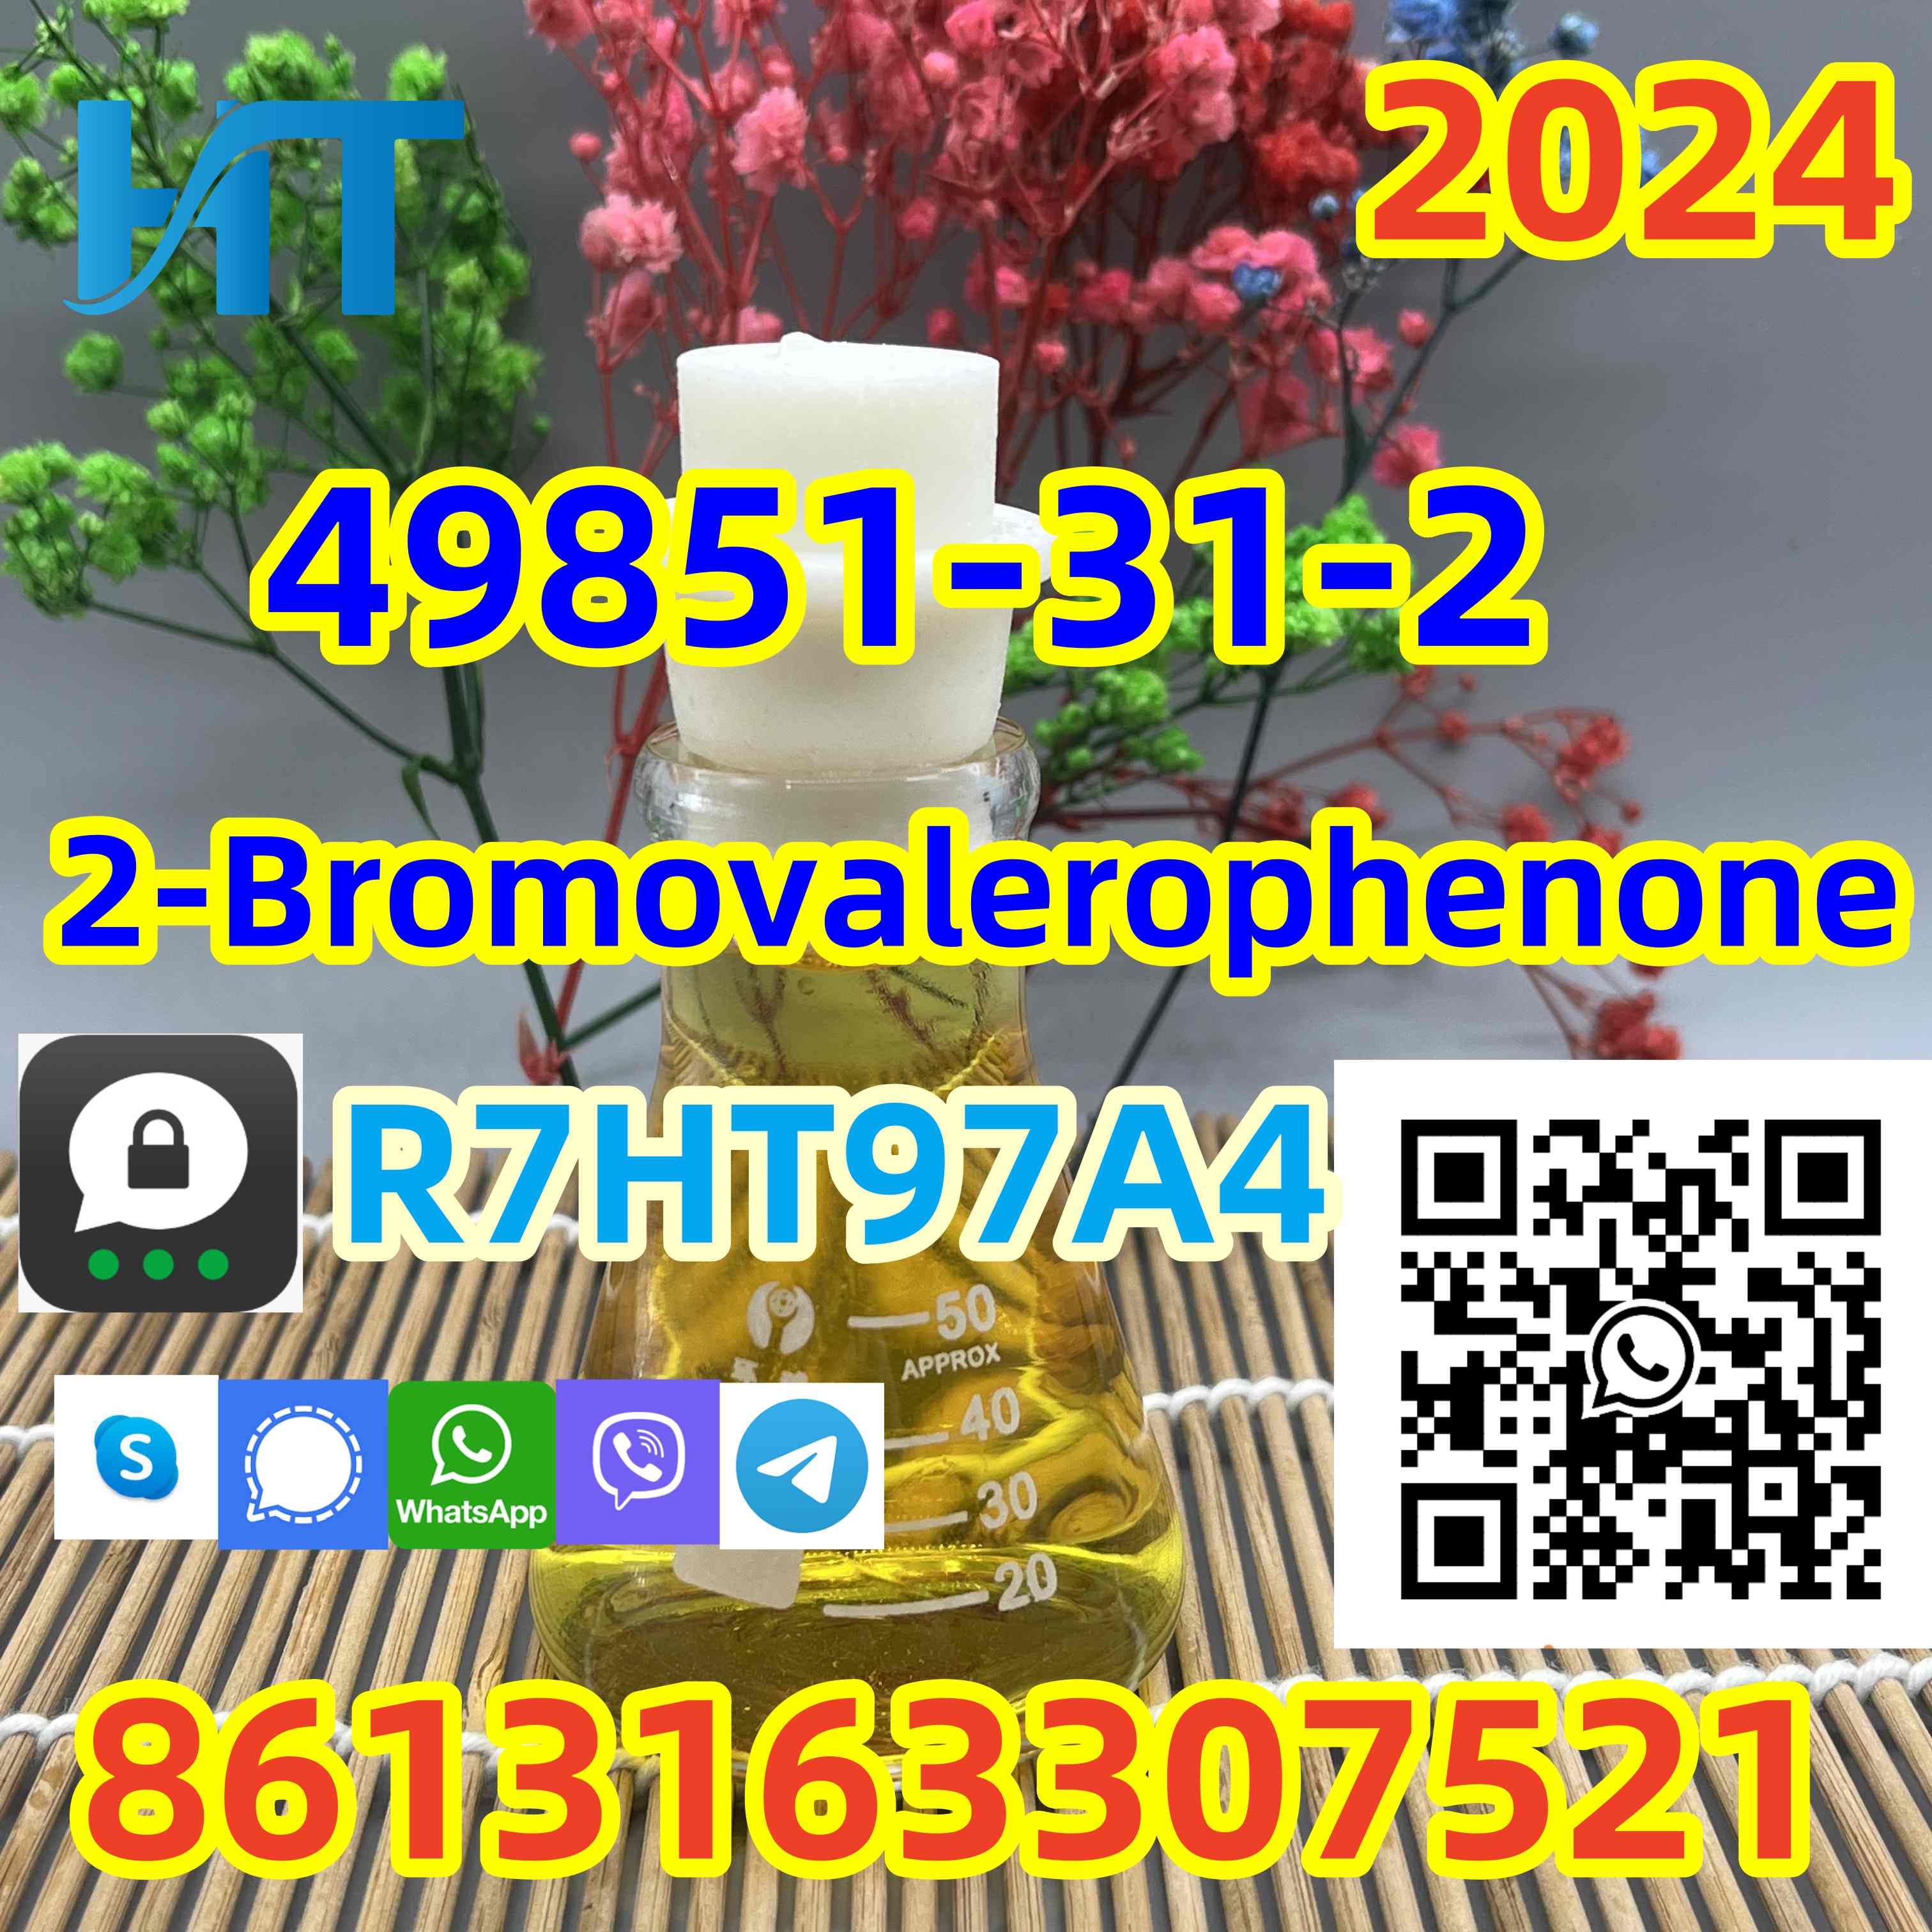 Factory stock 2-Bromovalerophenone CAS 49851-31-2 whatsapp+8613163307521 รูปที่ 1